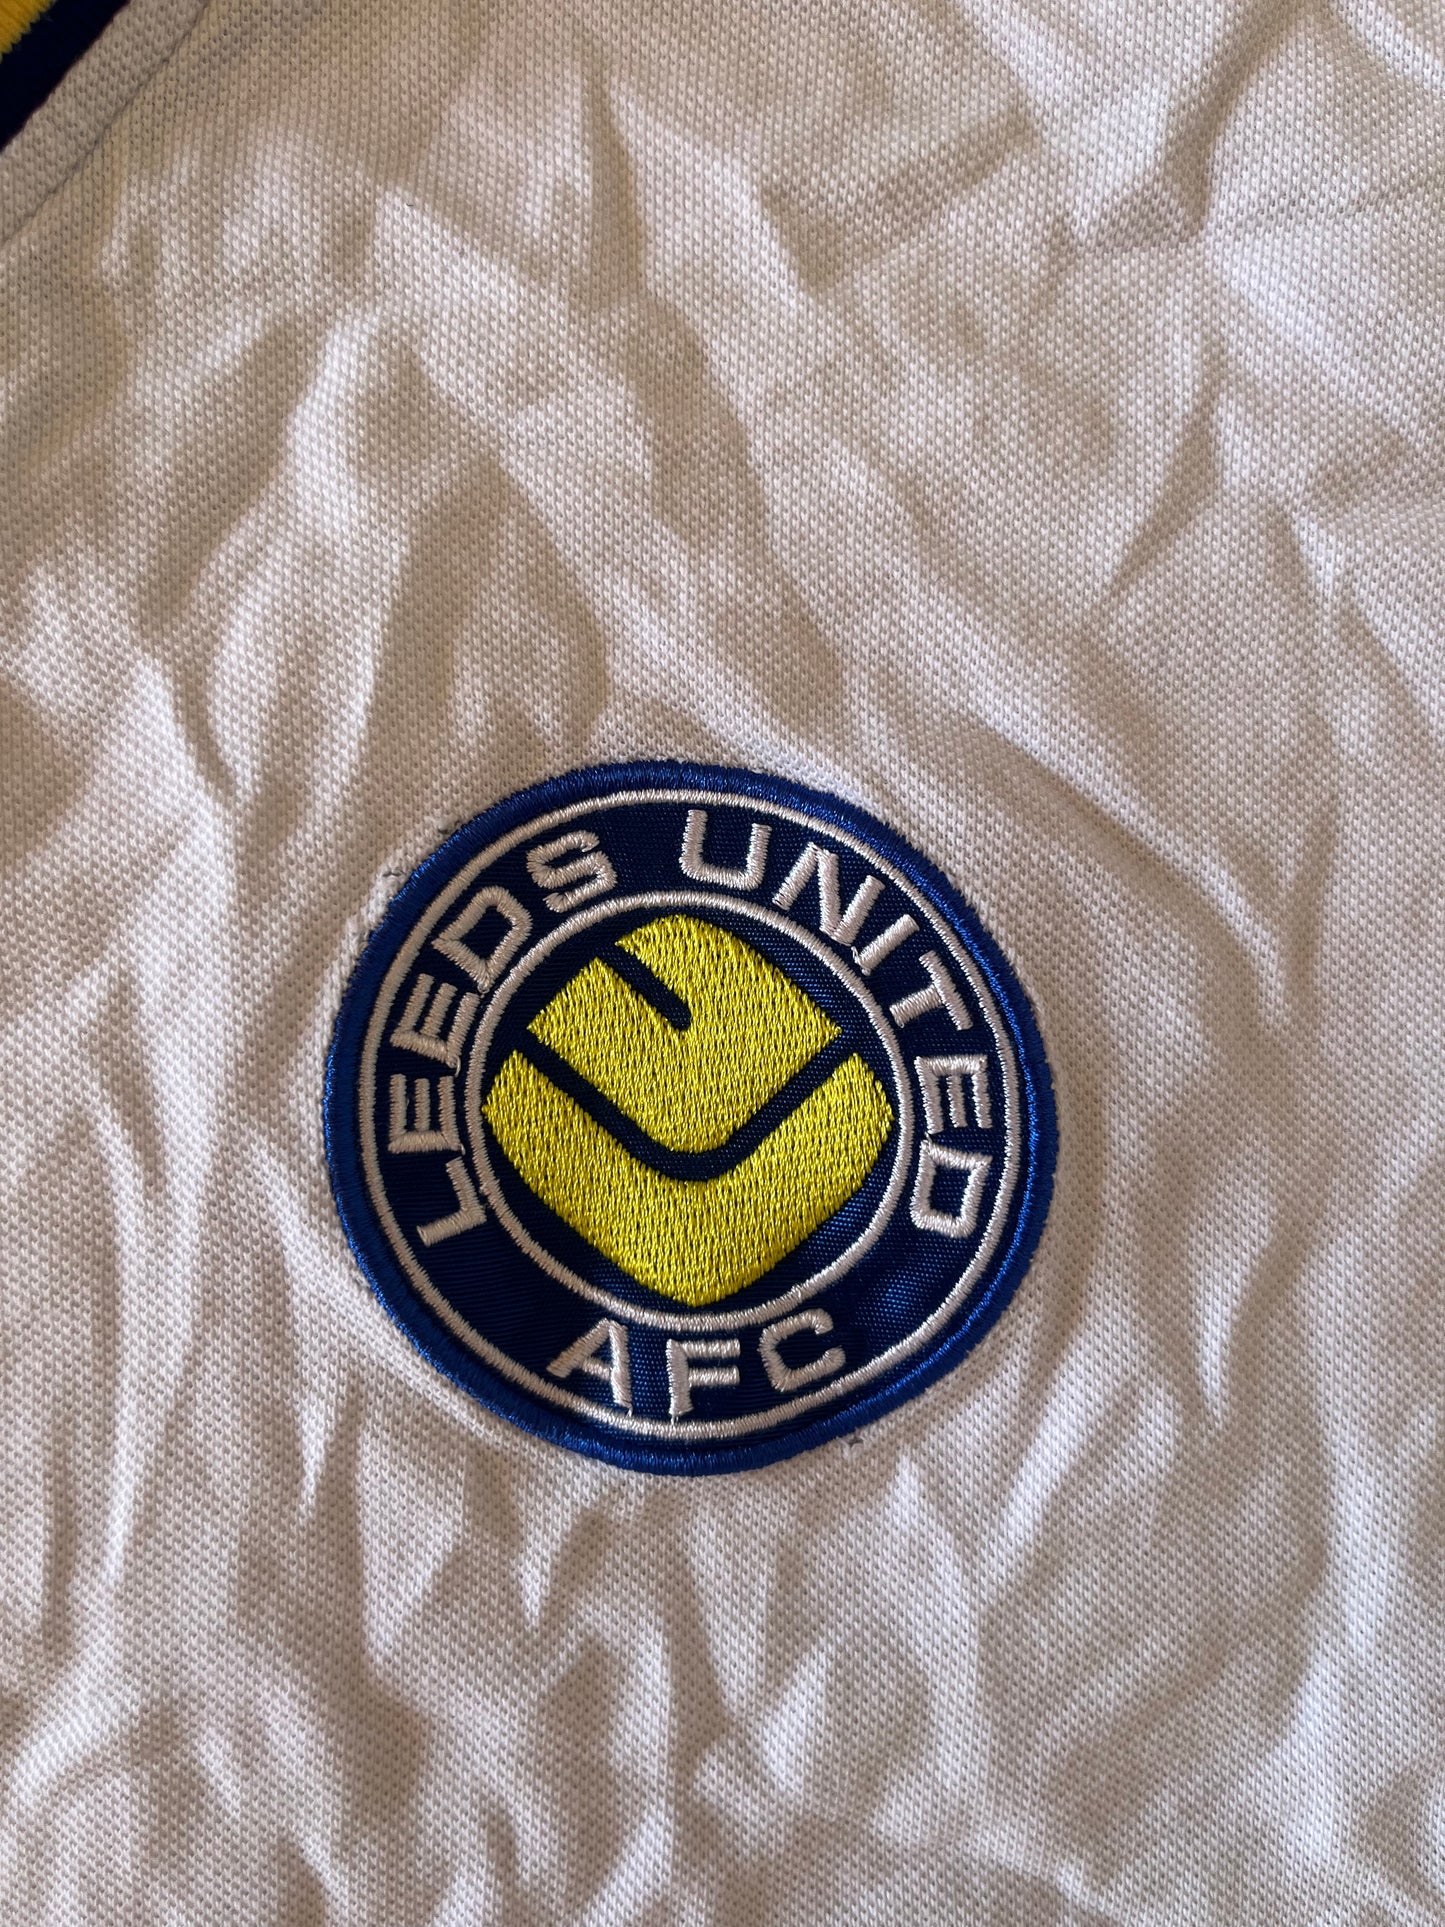 Leeds United Home 1980/81